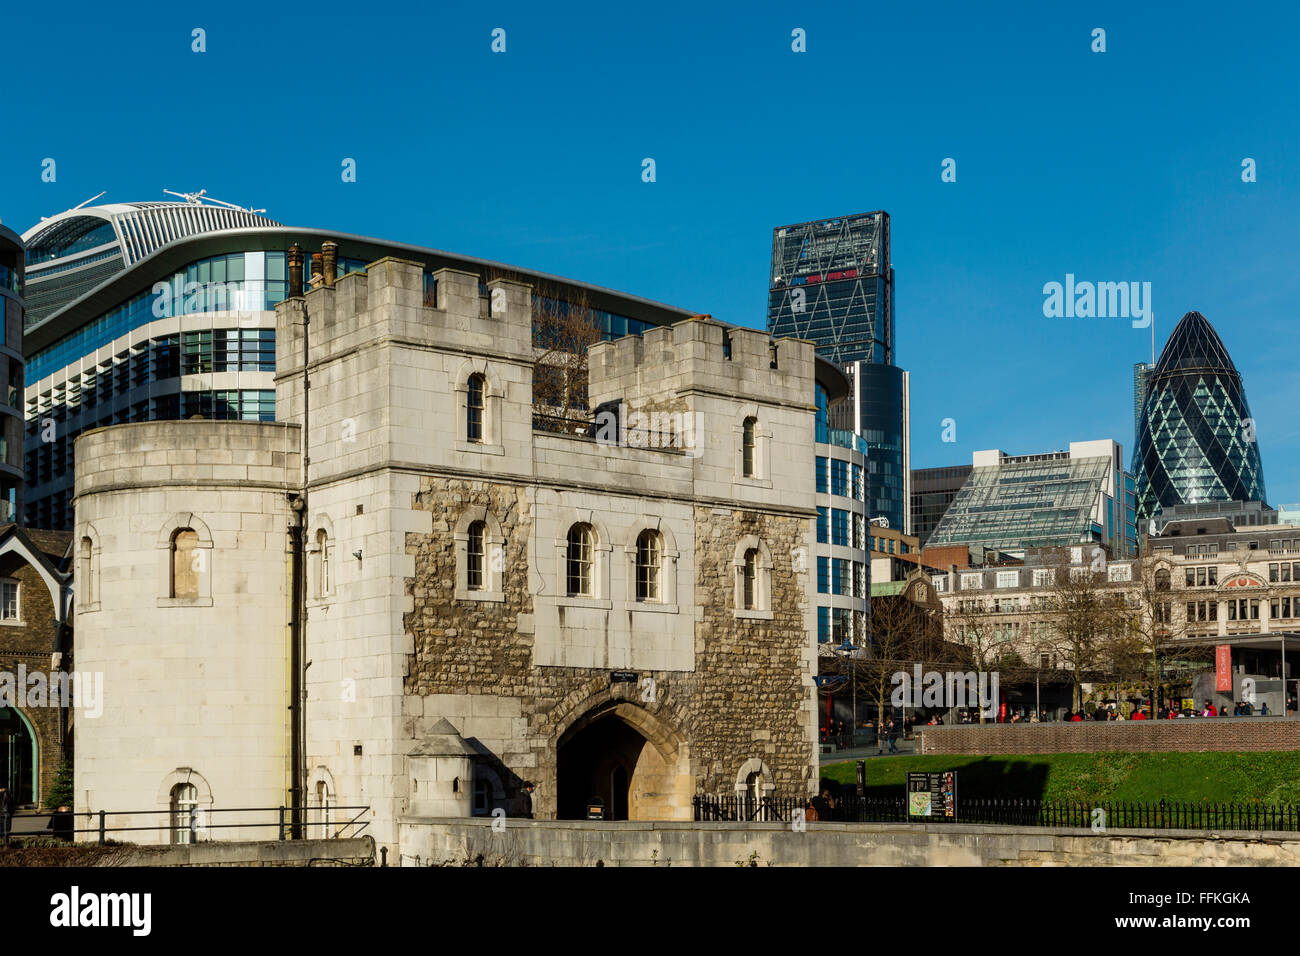 Main gate of London Tower, London, England Stock Photo